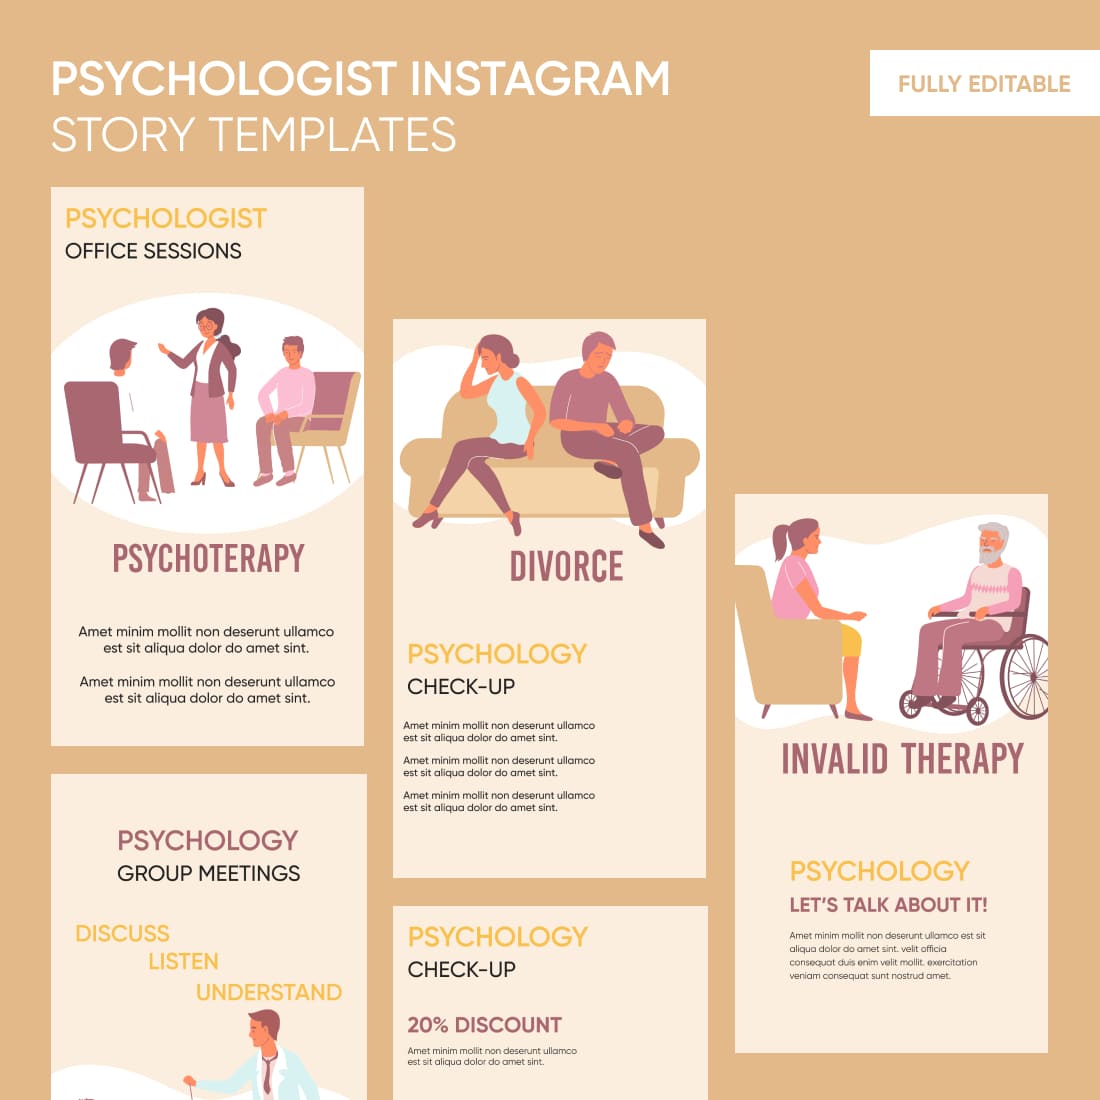 5 psychologist instagram story templates.